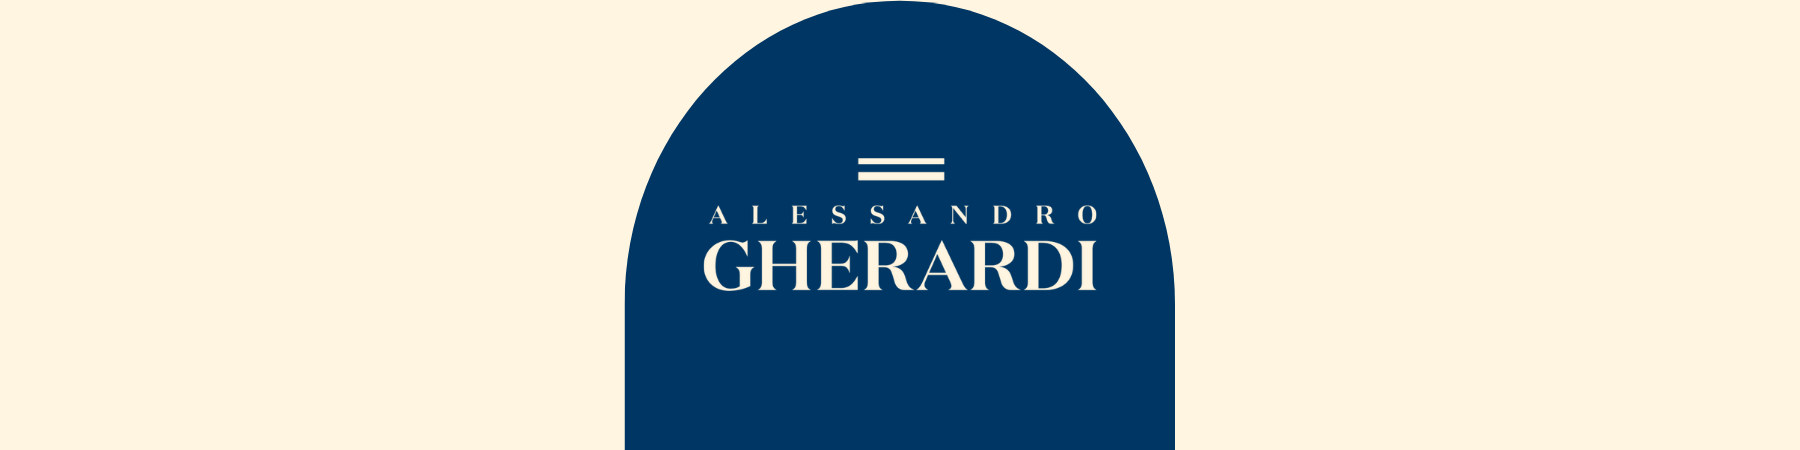 Alessandro Gherardi the local merchants